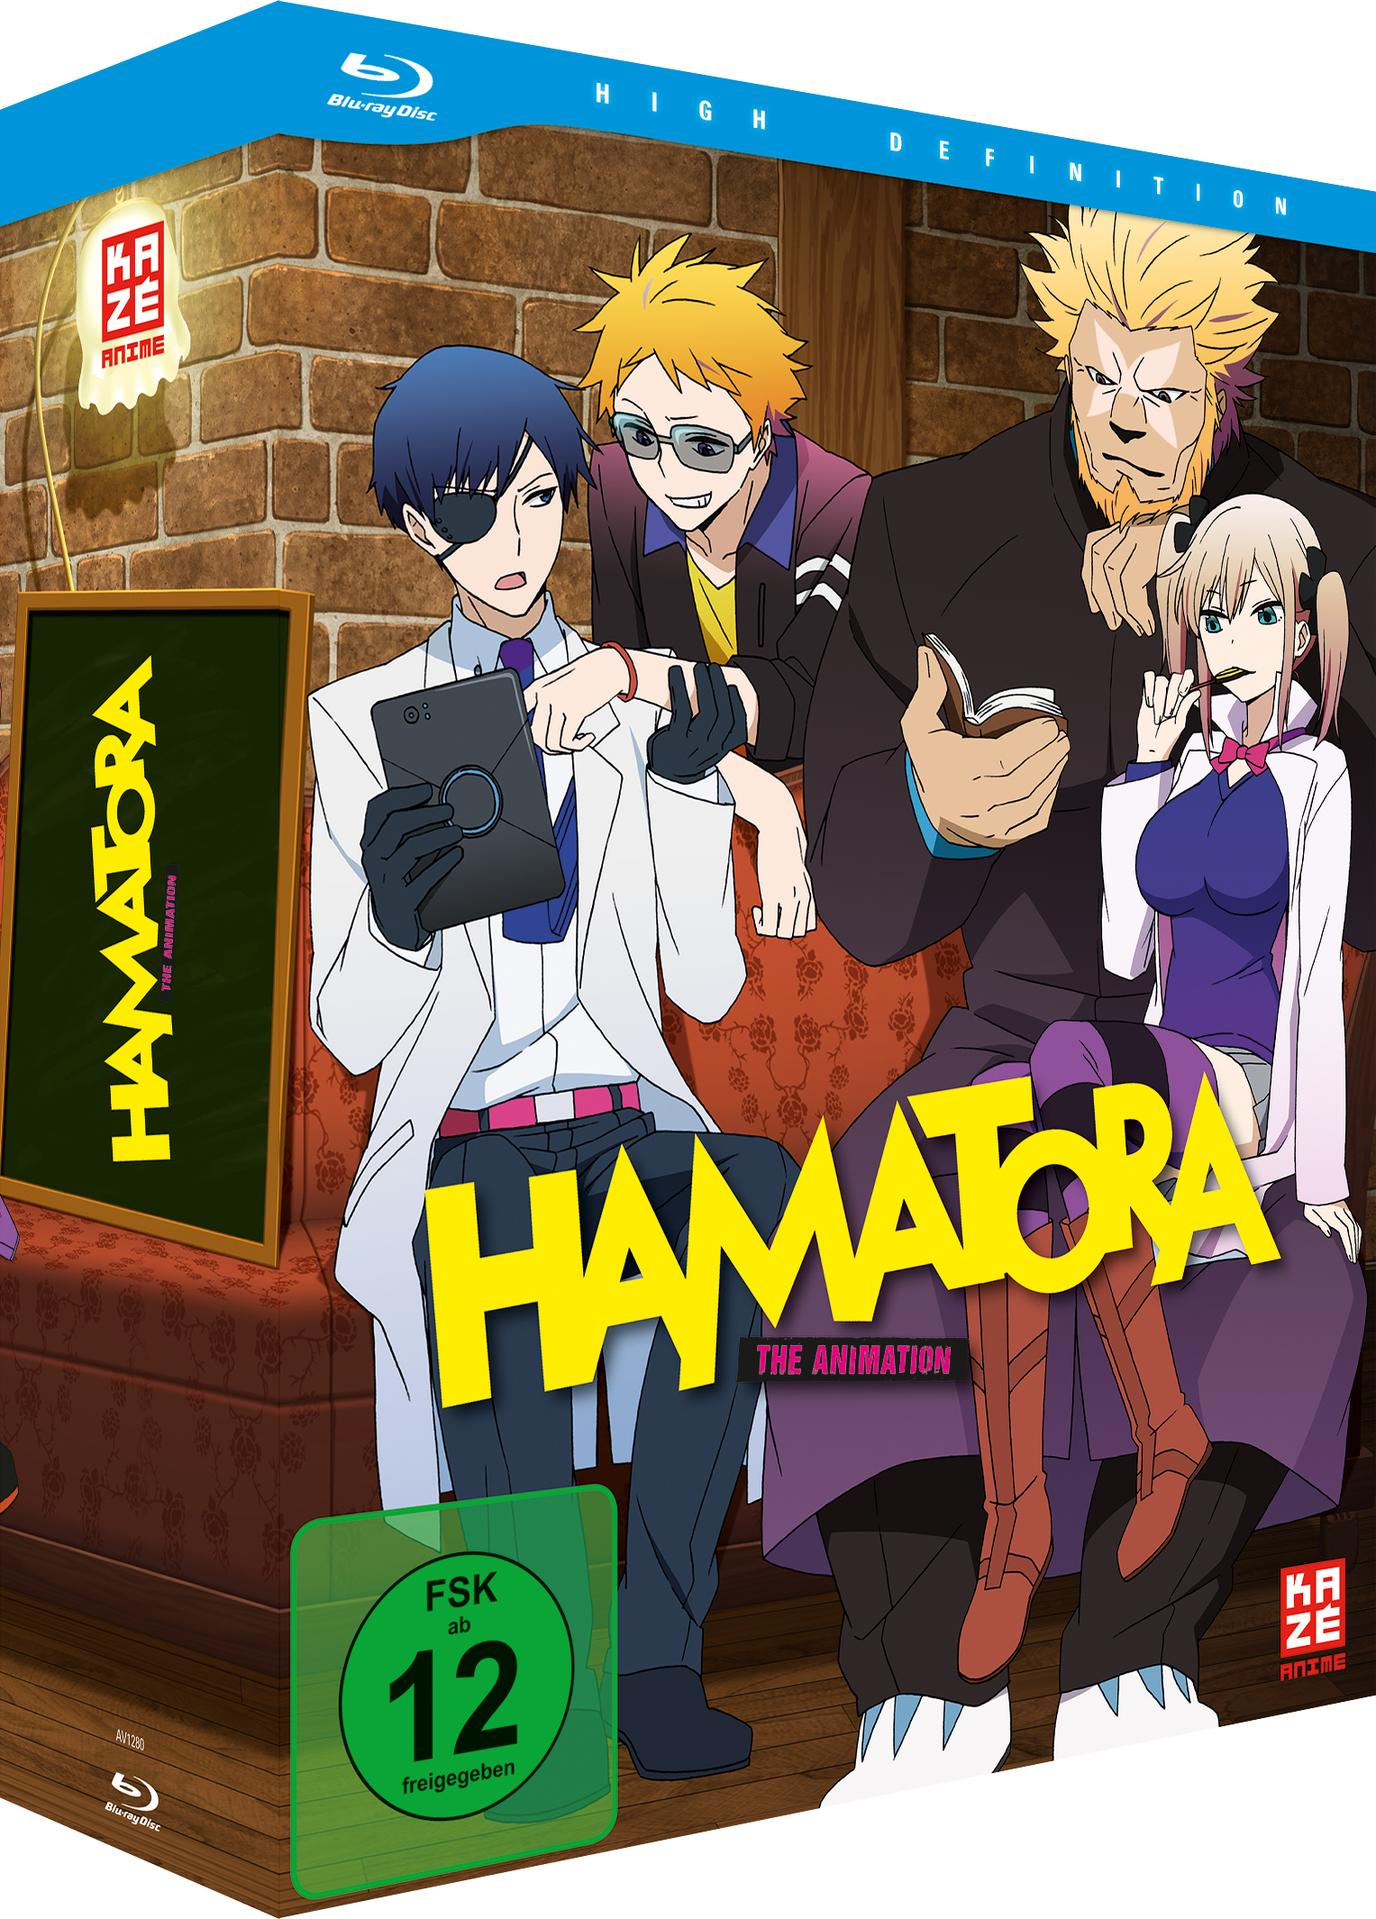 The Blu-ray – Hamatora – Animation Gesamtausgabe